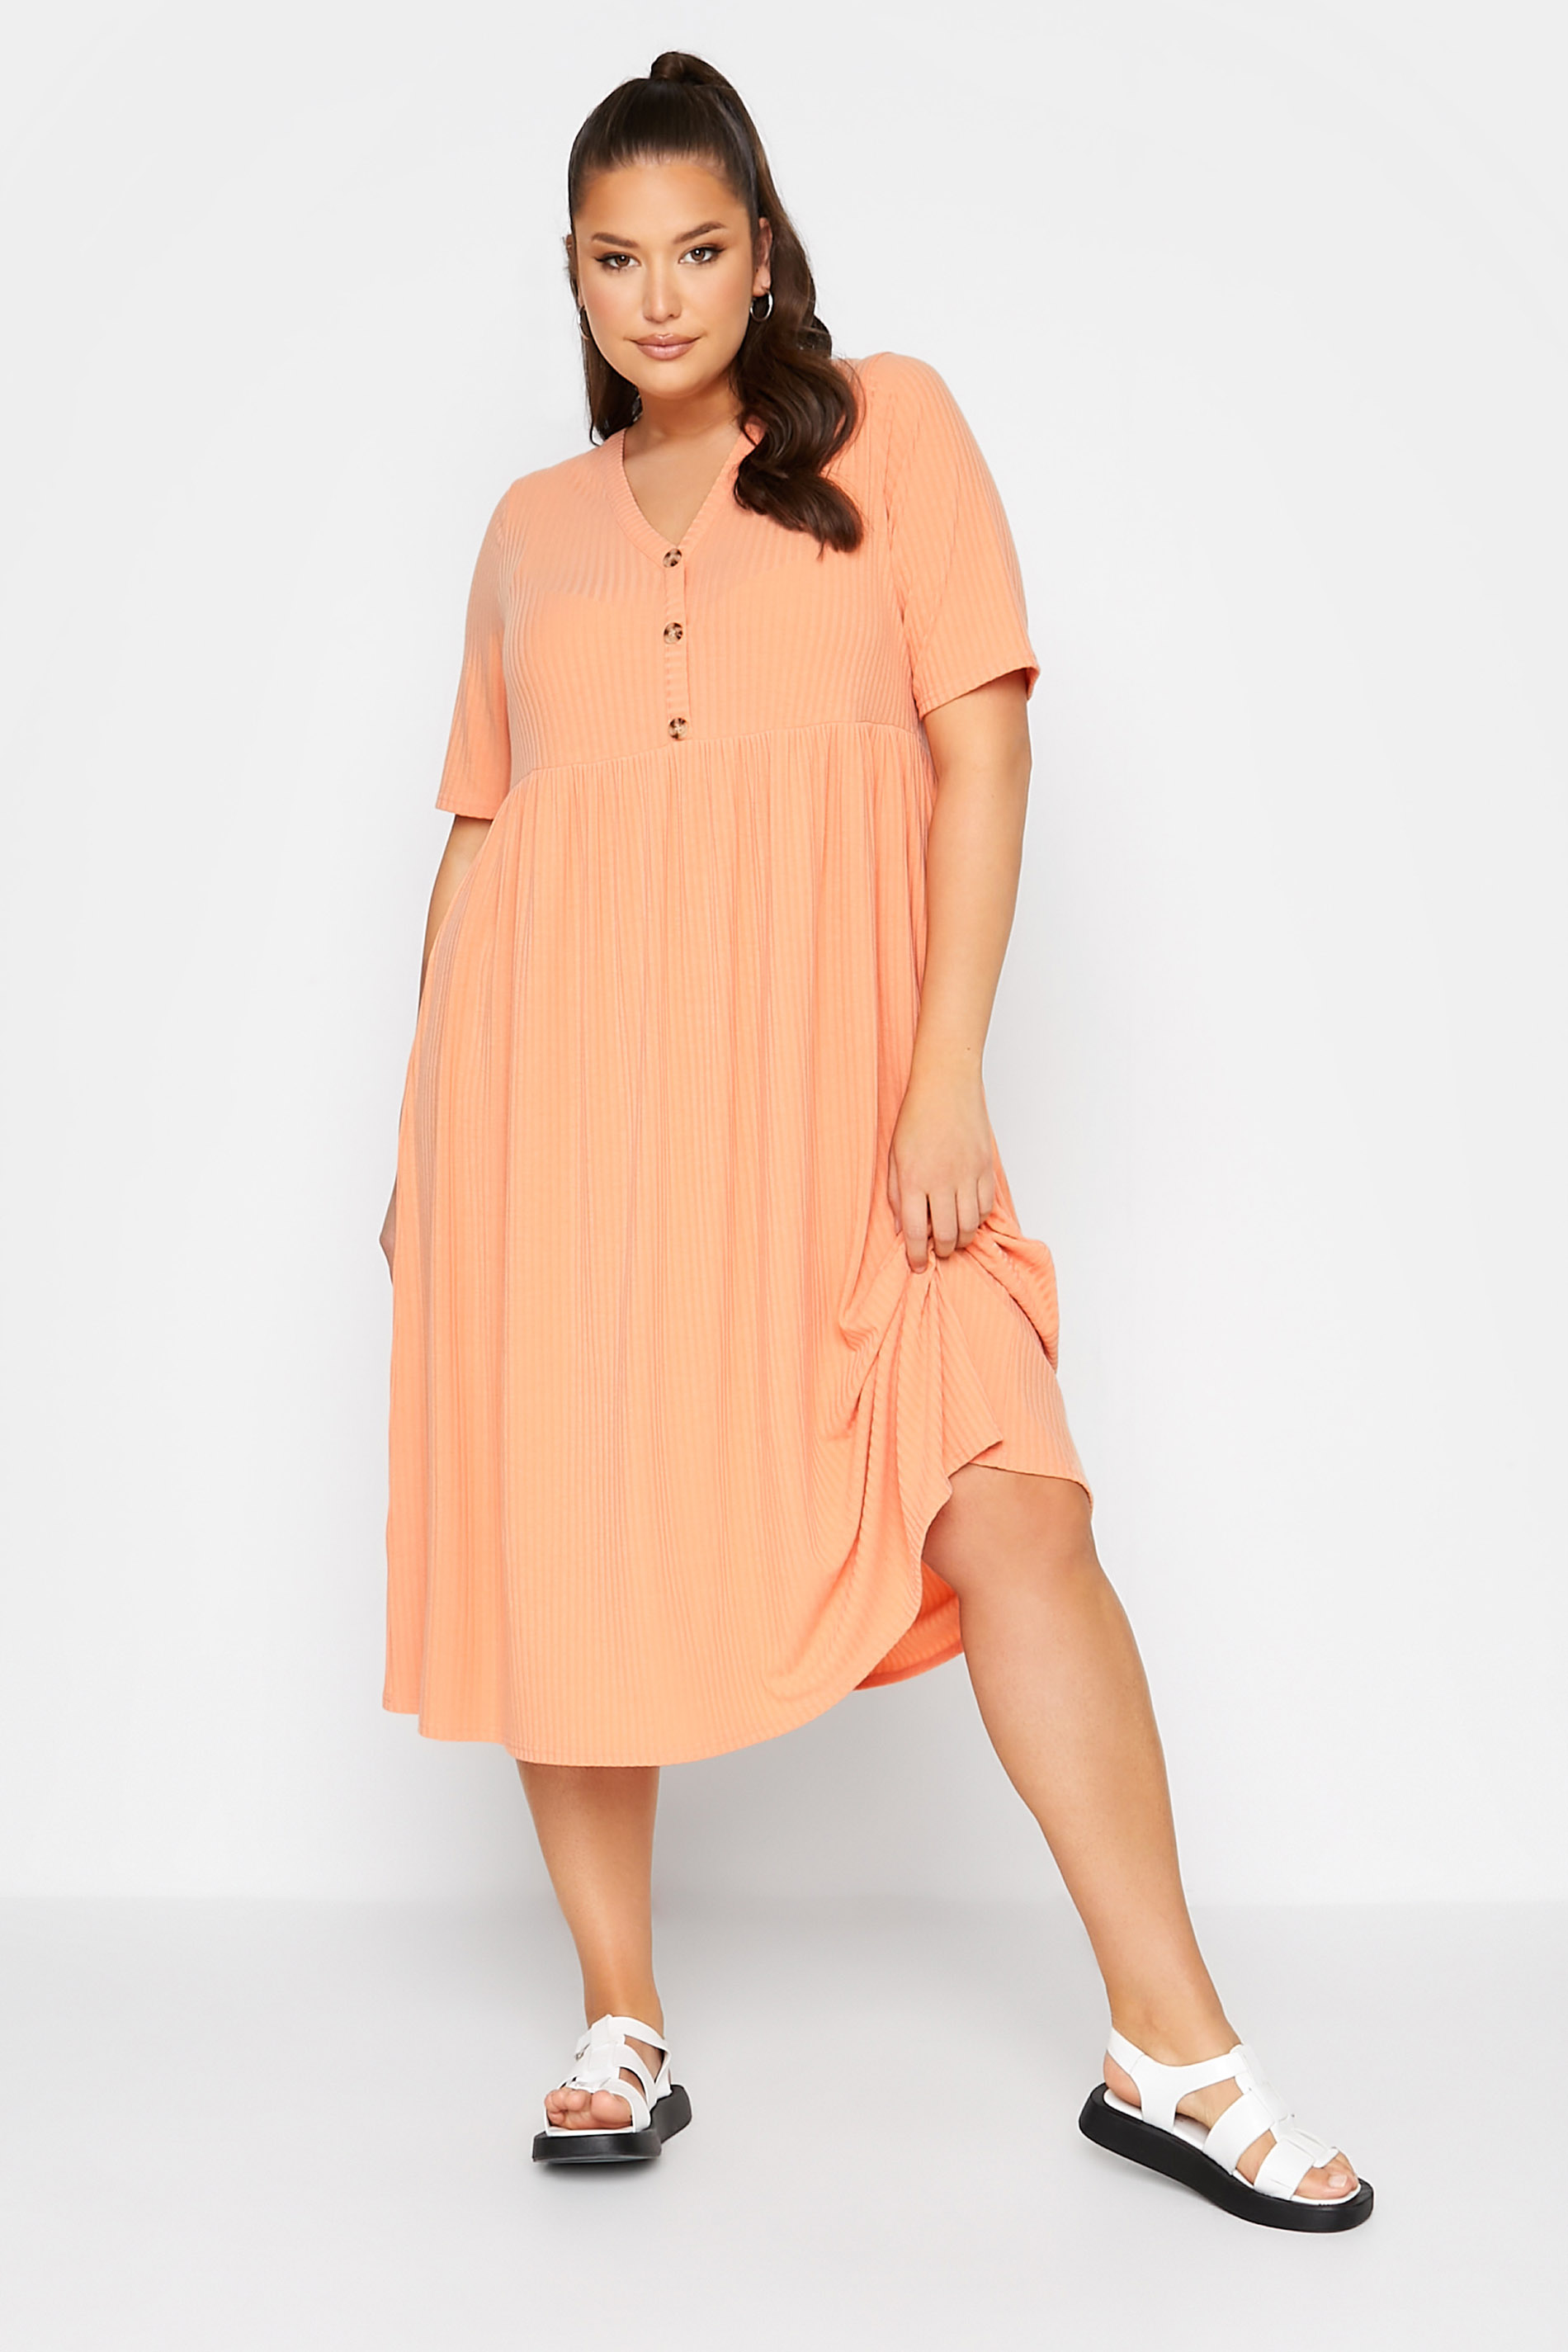 LIMITED COLLECTION Plus Size Light Orange Ribbed Peplum Midi Dress | Yours Clothing  2